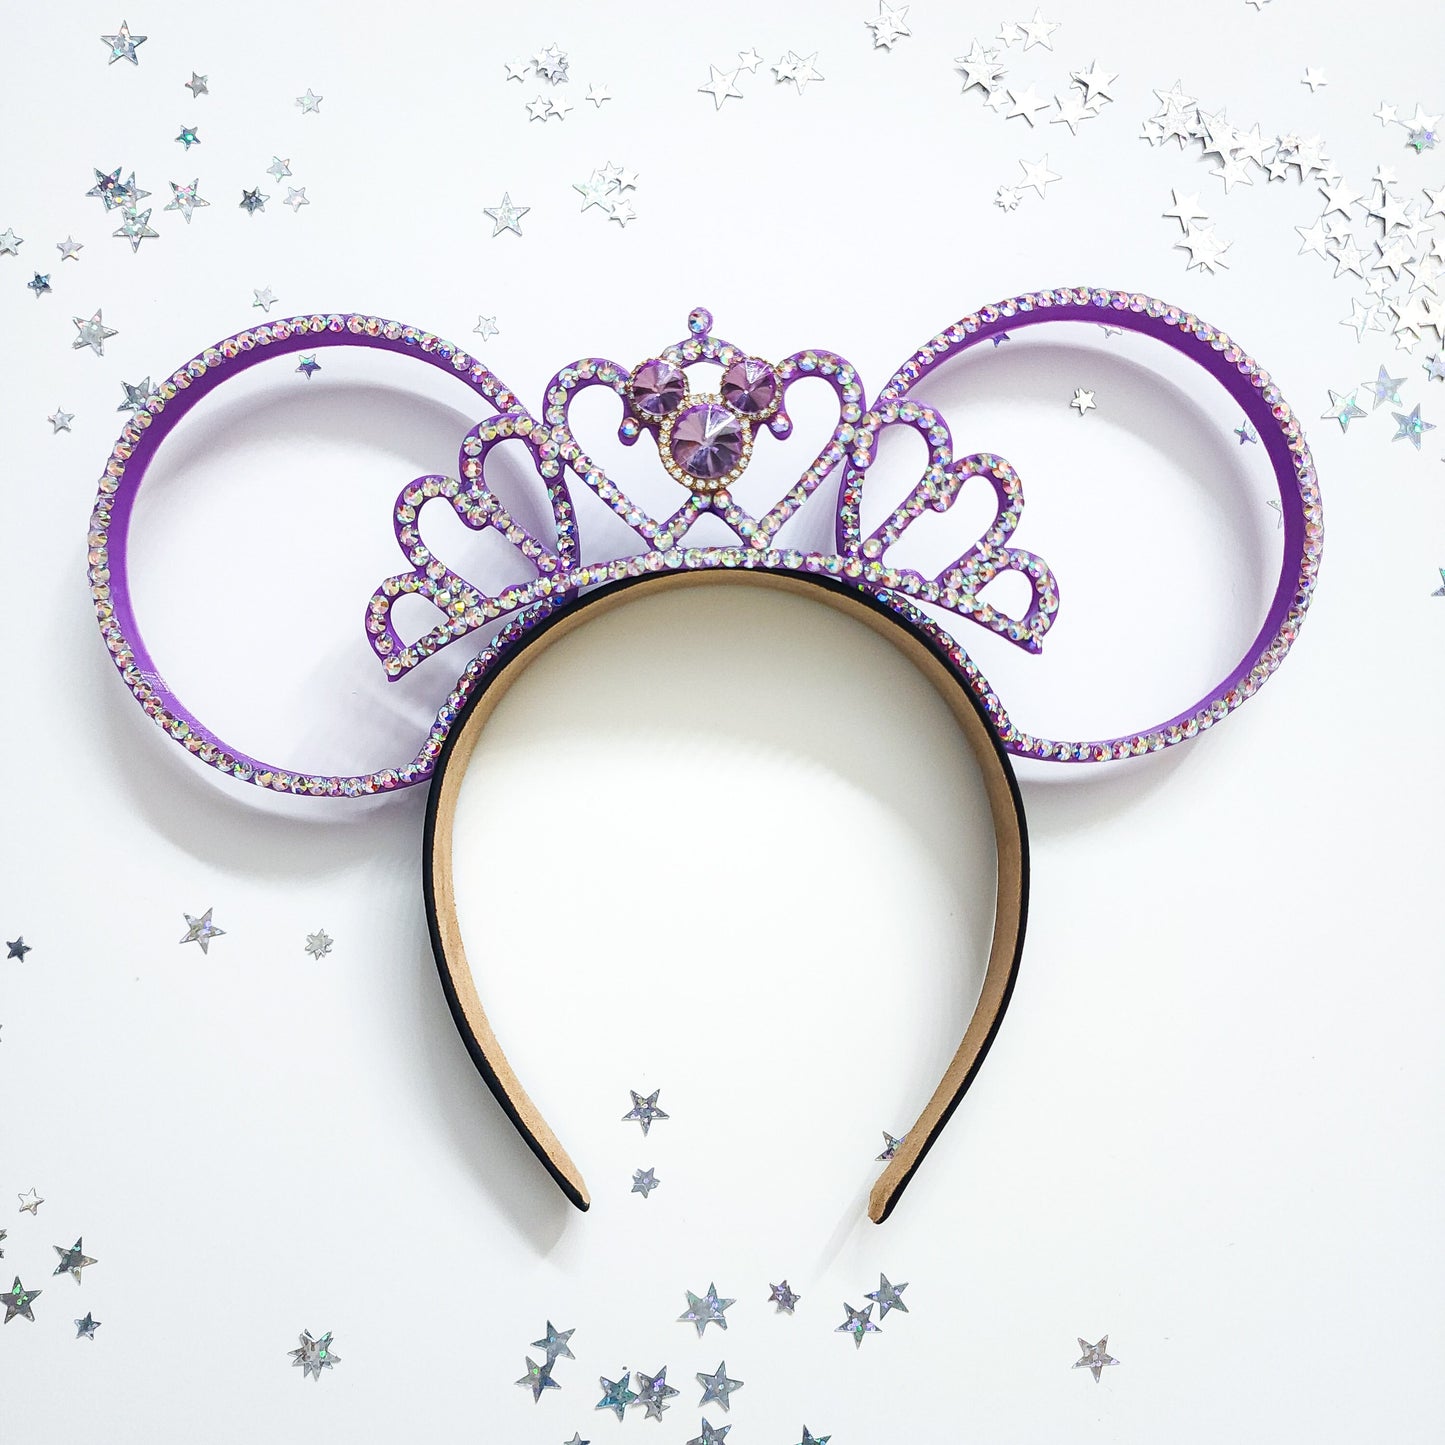 Mouse tiara Ab Rhinestone crown with 3d Rhinestone ears. Your choice of silver, pink, or purple tiara